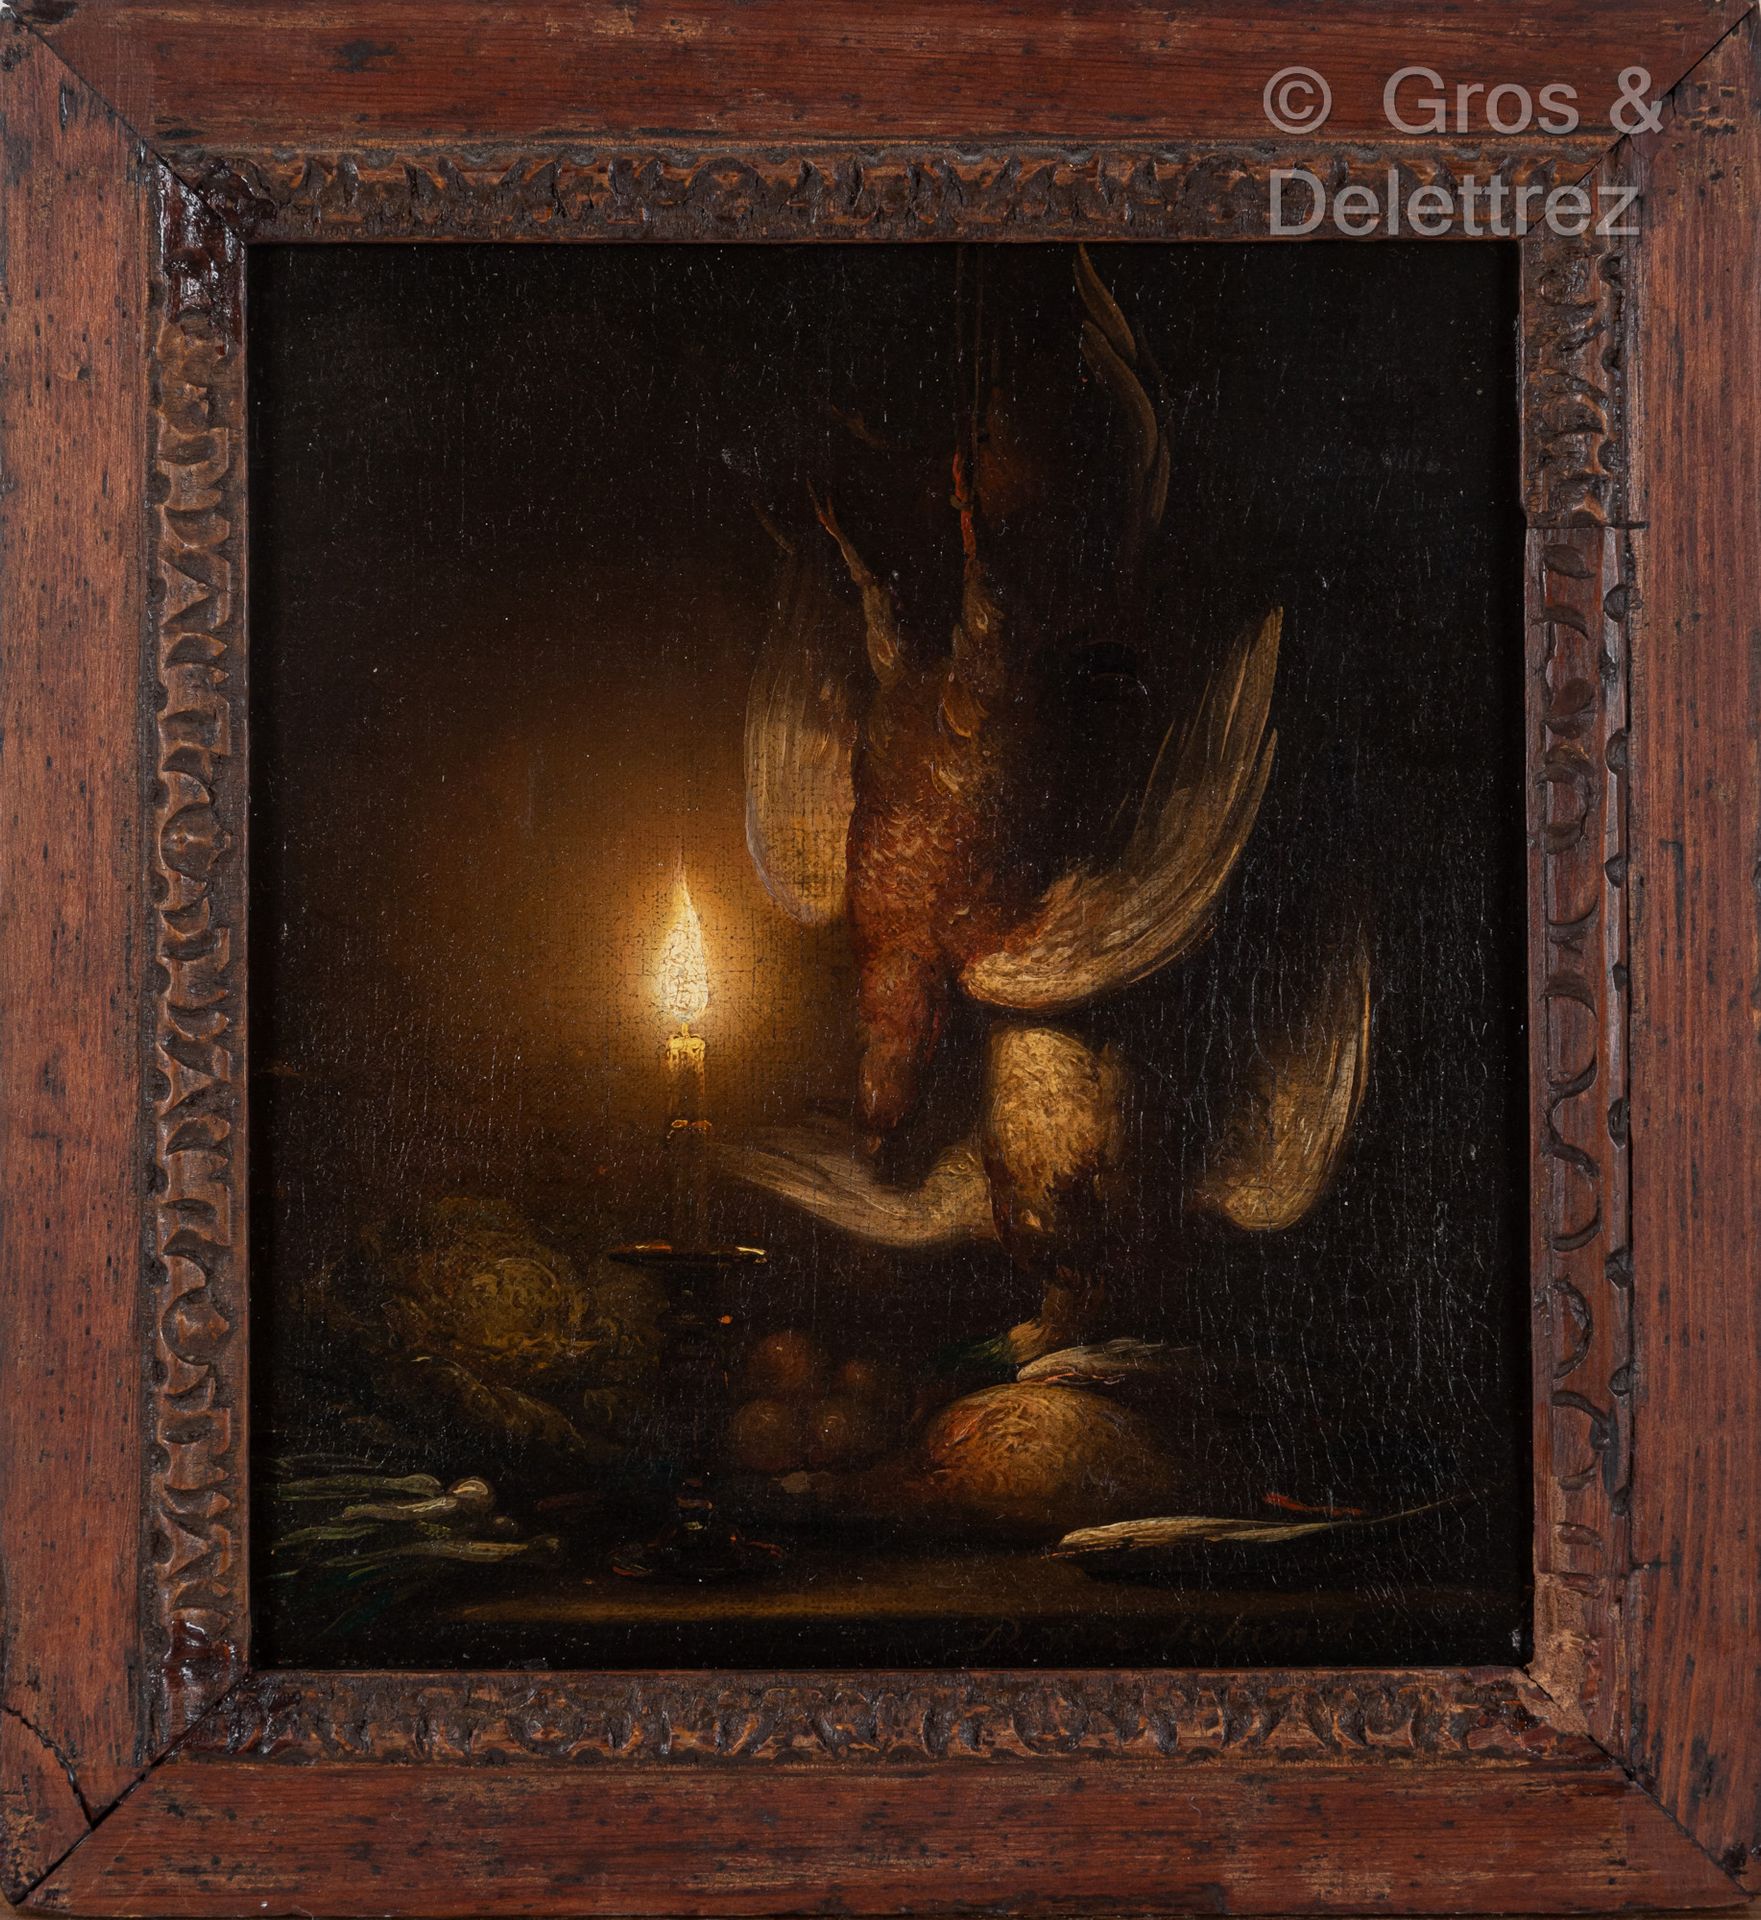 Null 佩特鲁斯-凡-申登的风格

有鸟和蜡烛的静物画

有天书签名的板上油画

23 x 20.5 cm